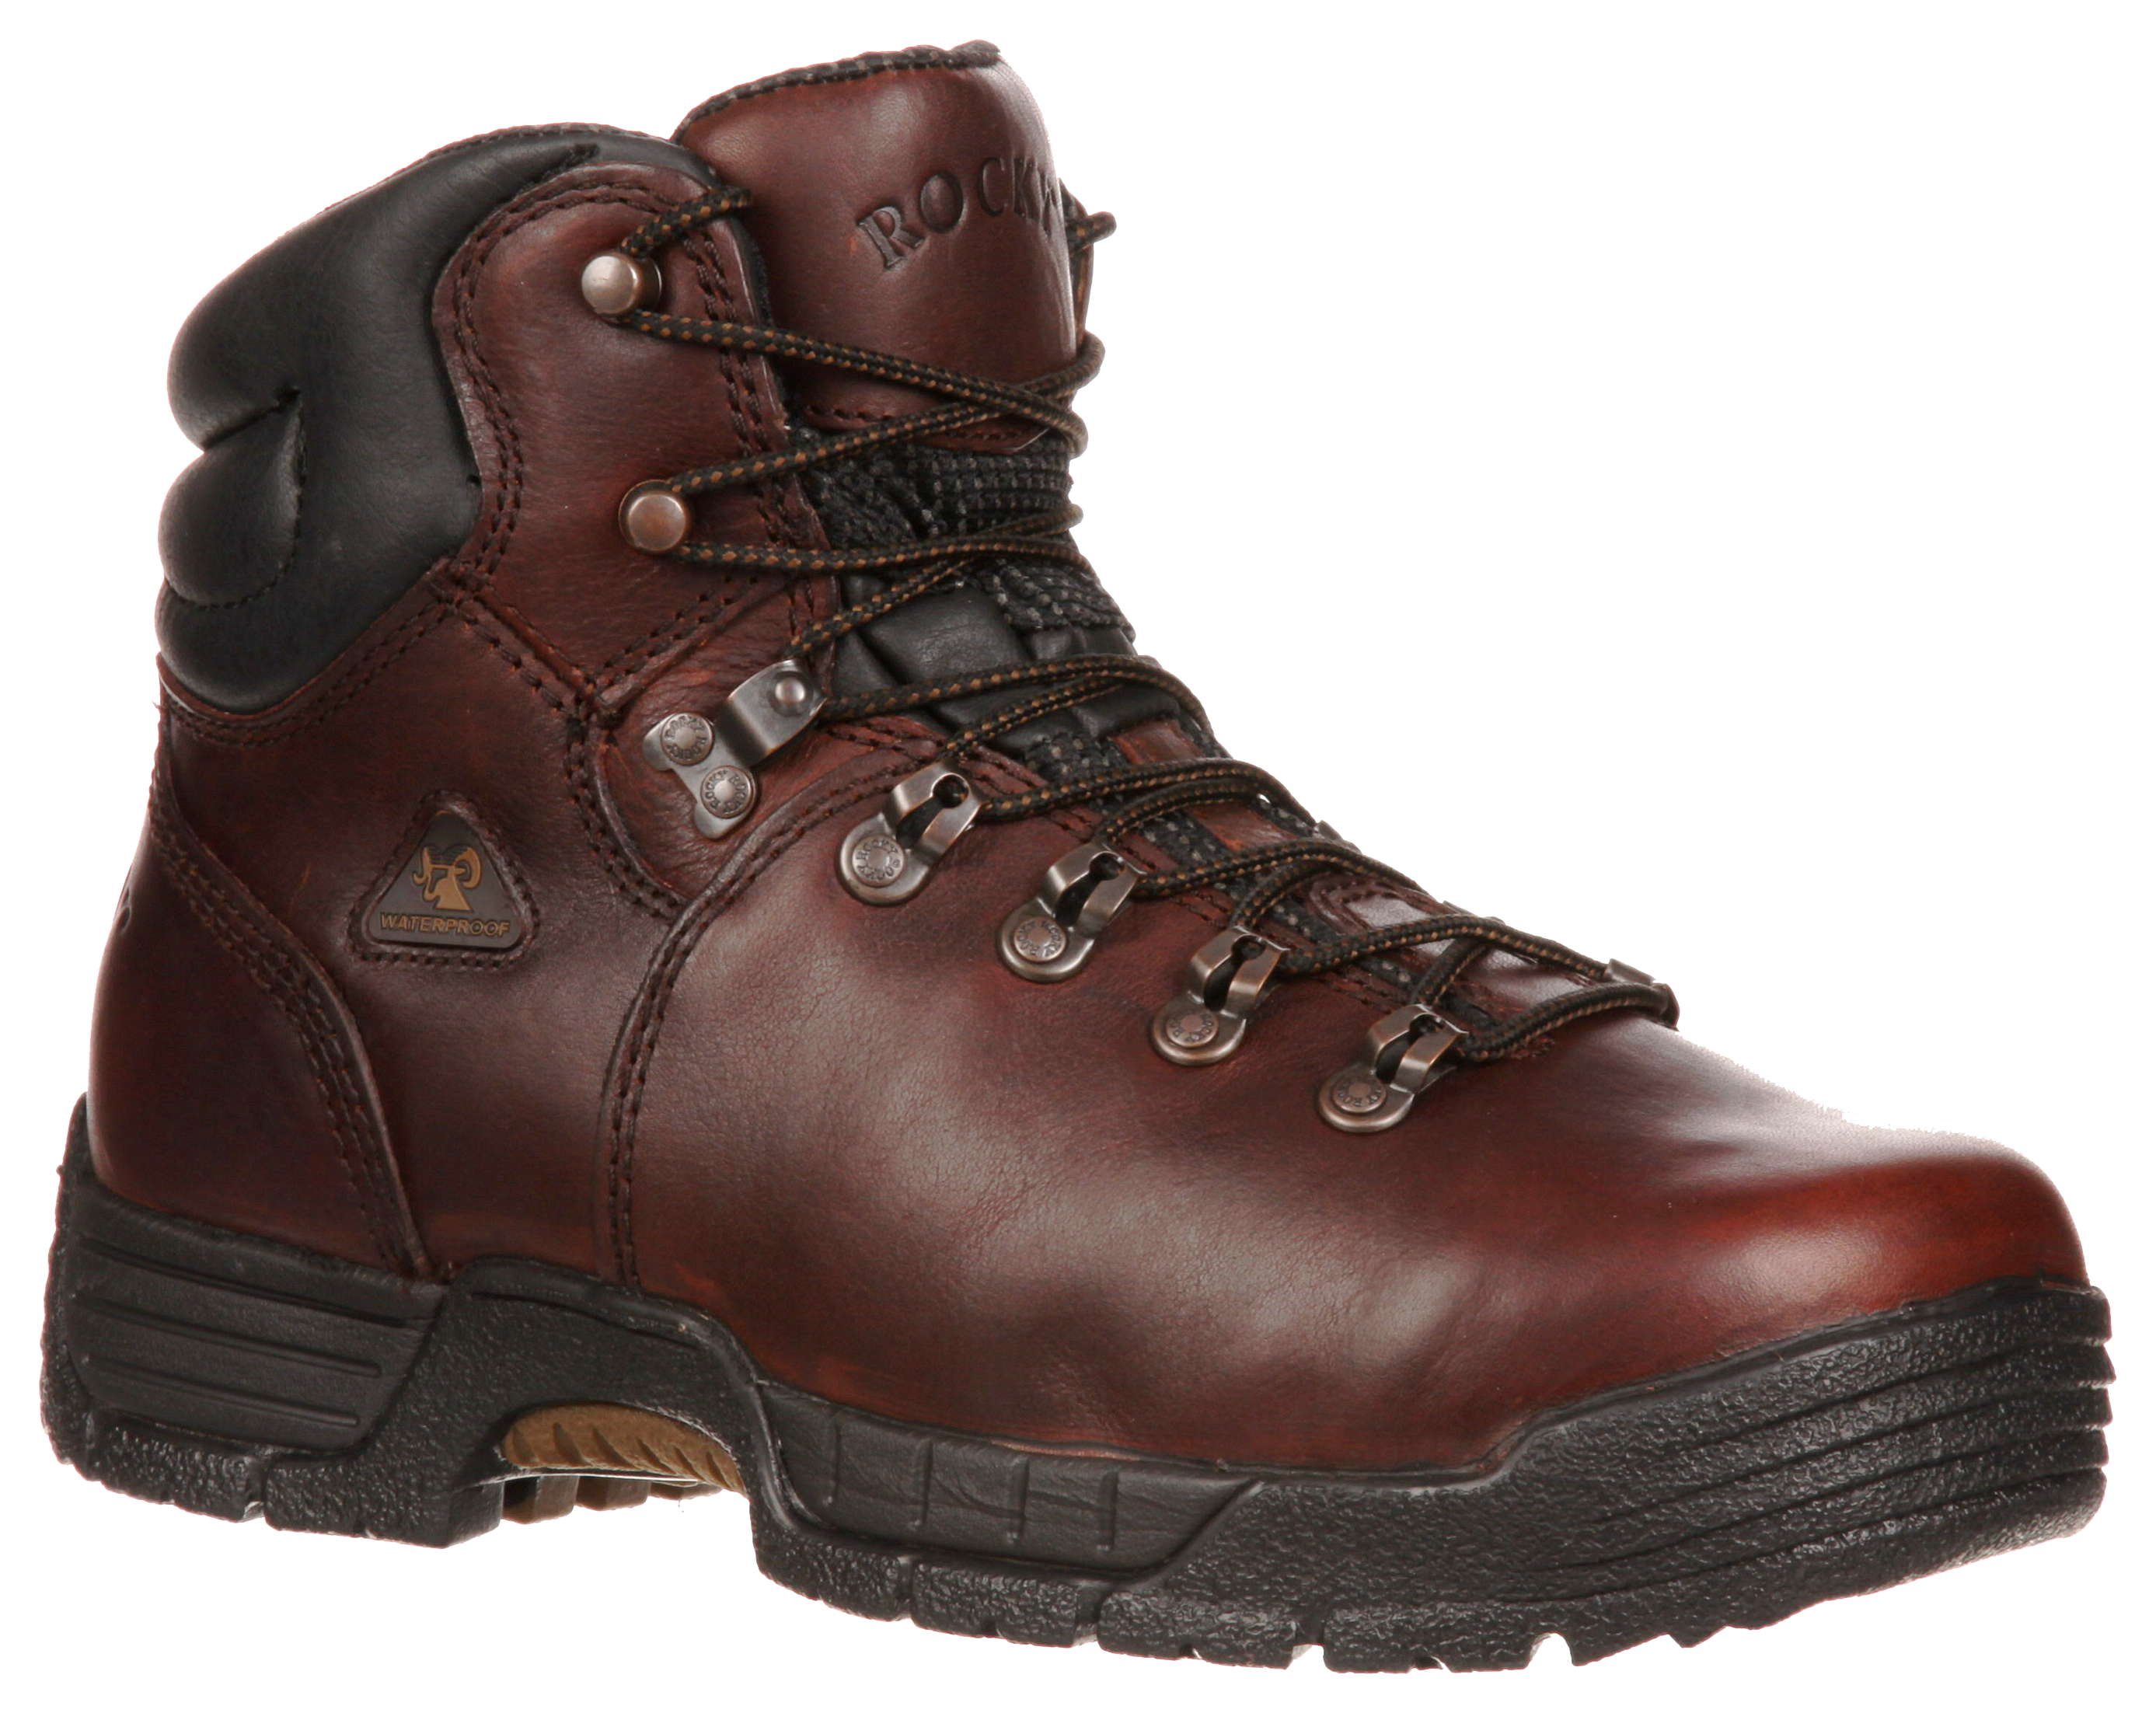 ROCKY MobiLite Waterproof Steel Toe Work Boots for Men - Brown - 11.5 W